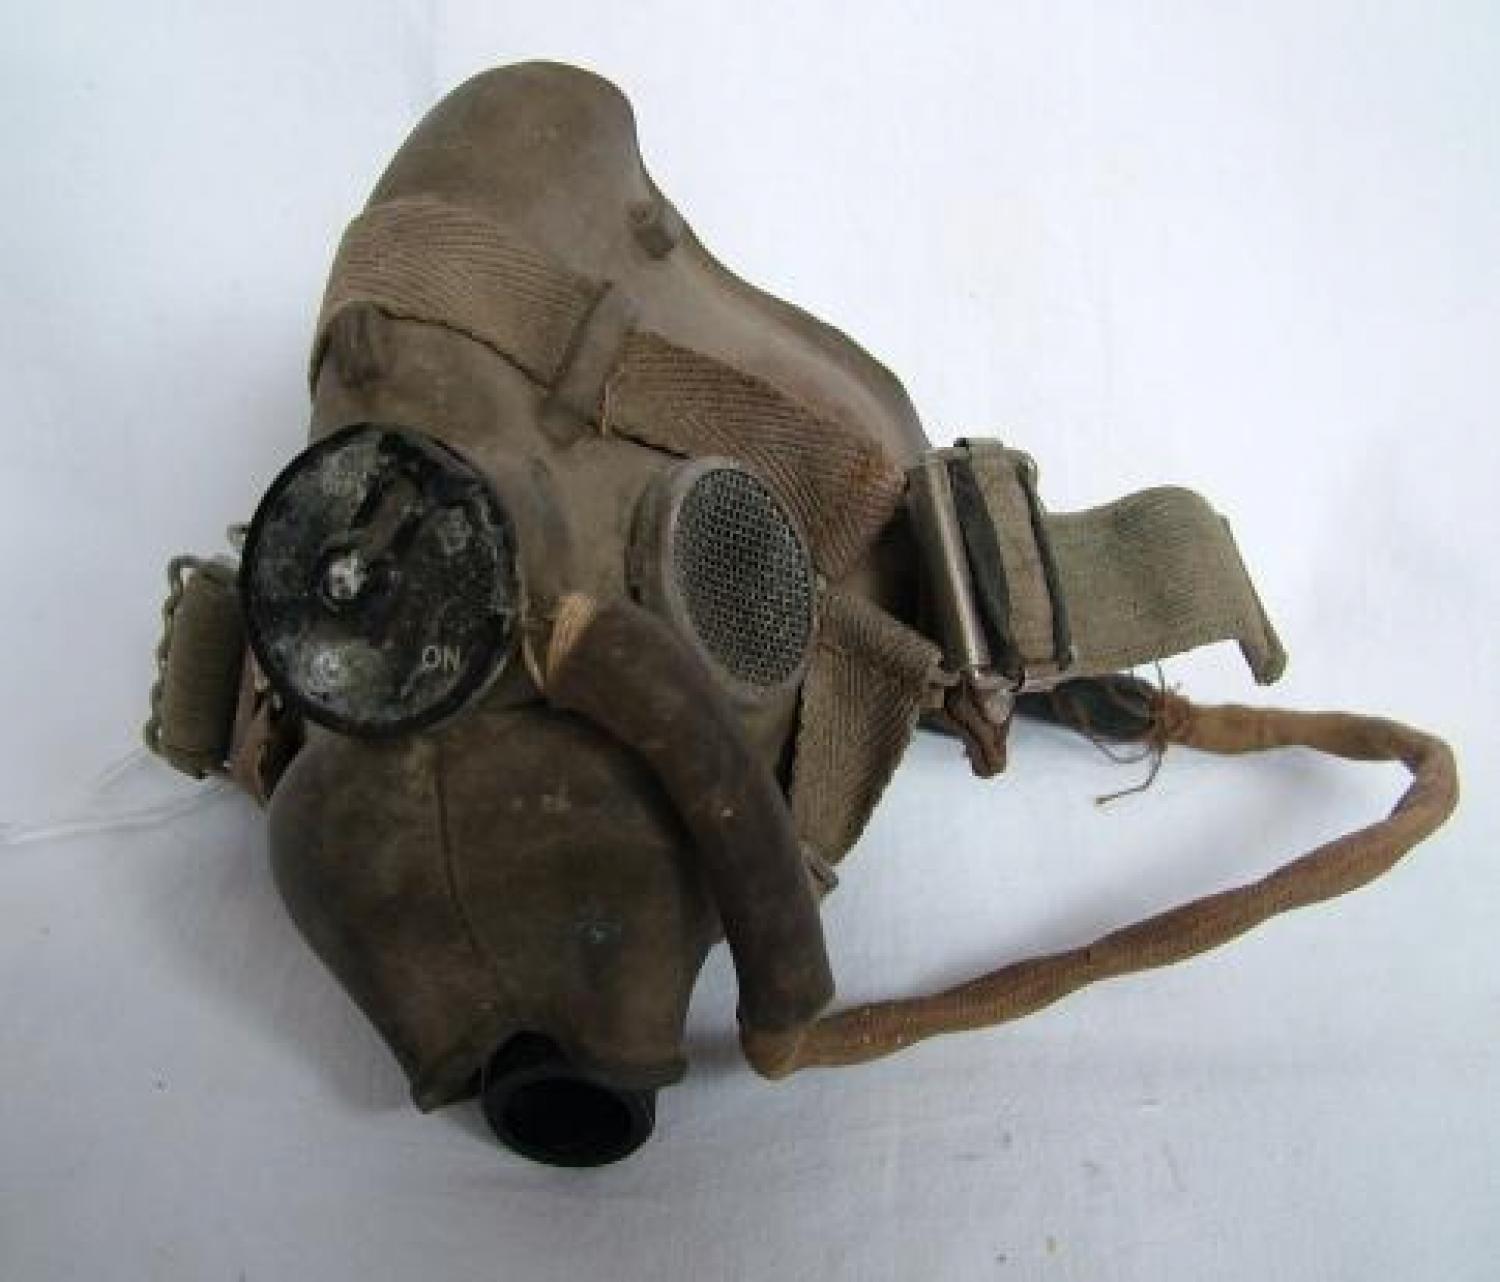 RAF Type H Oxygen Mask, WW2 Dated